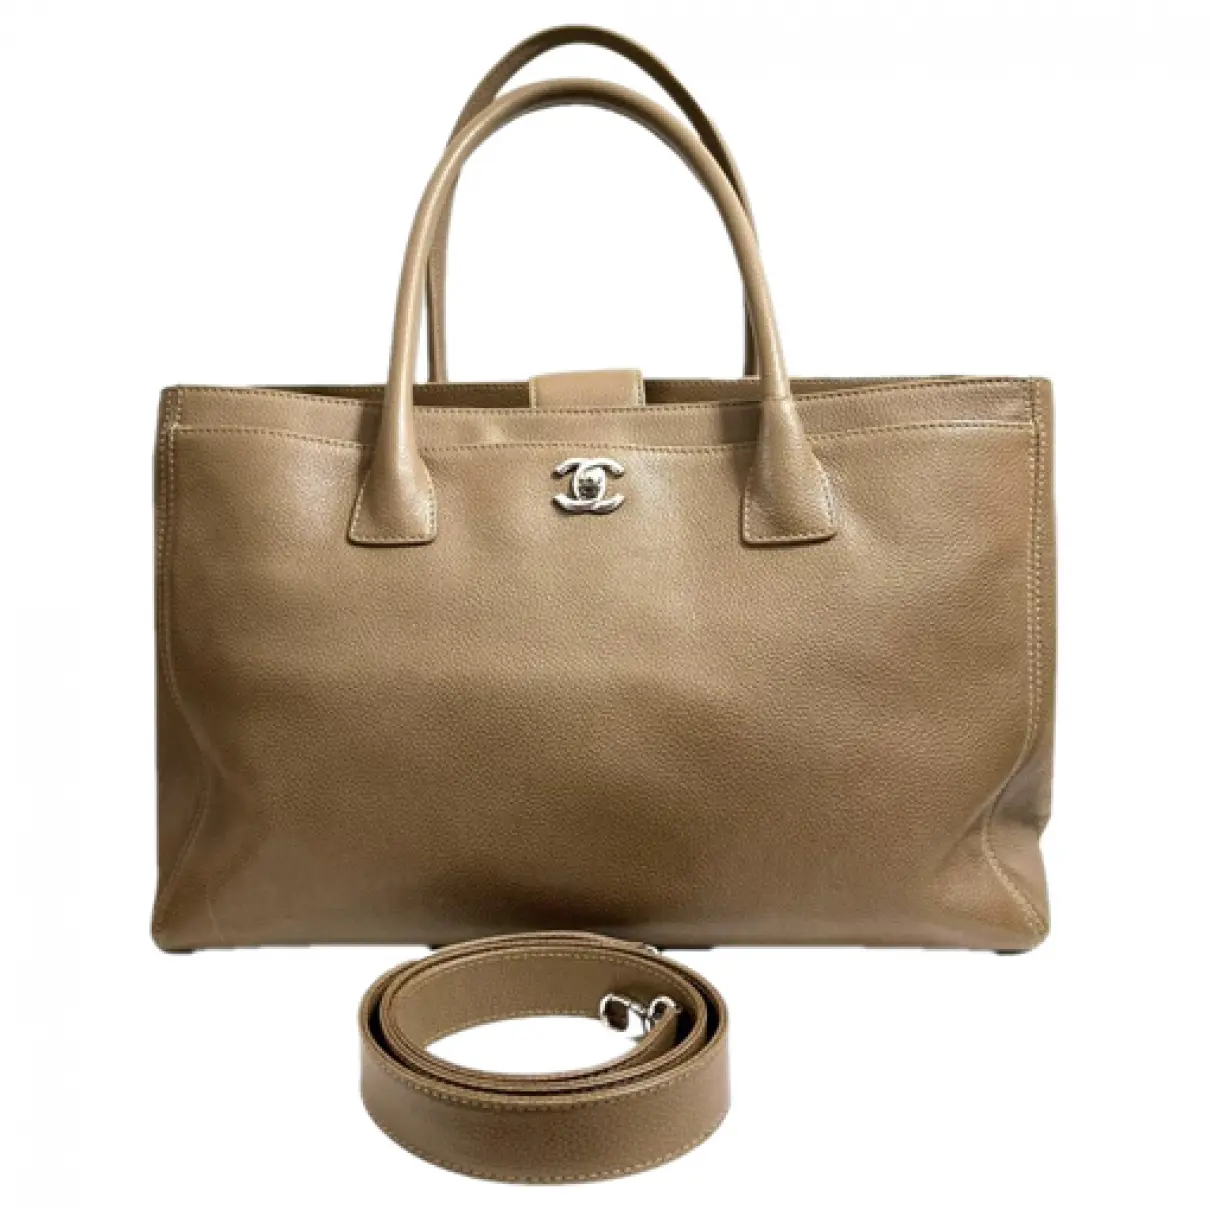 Executive leather handbag